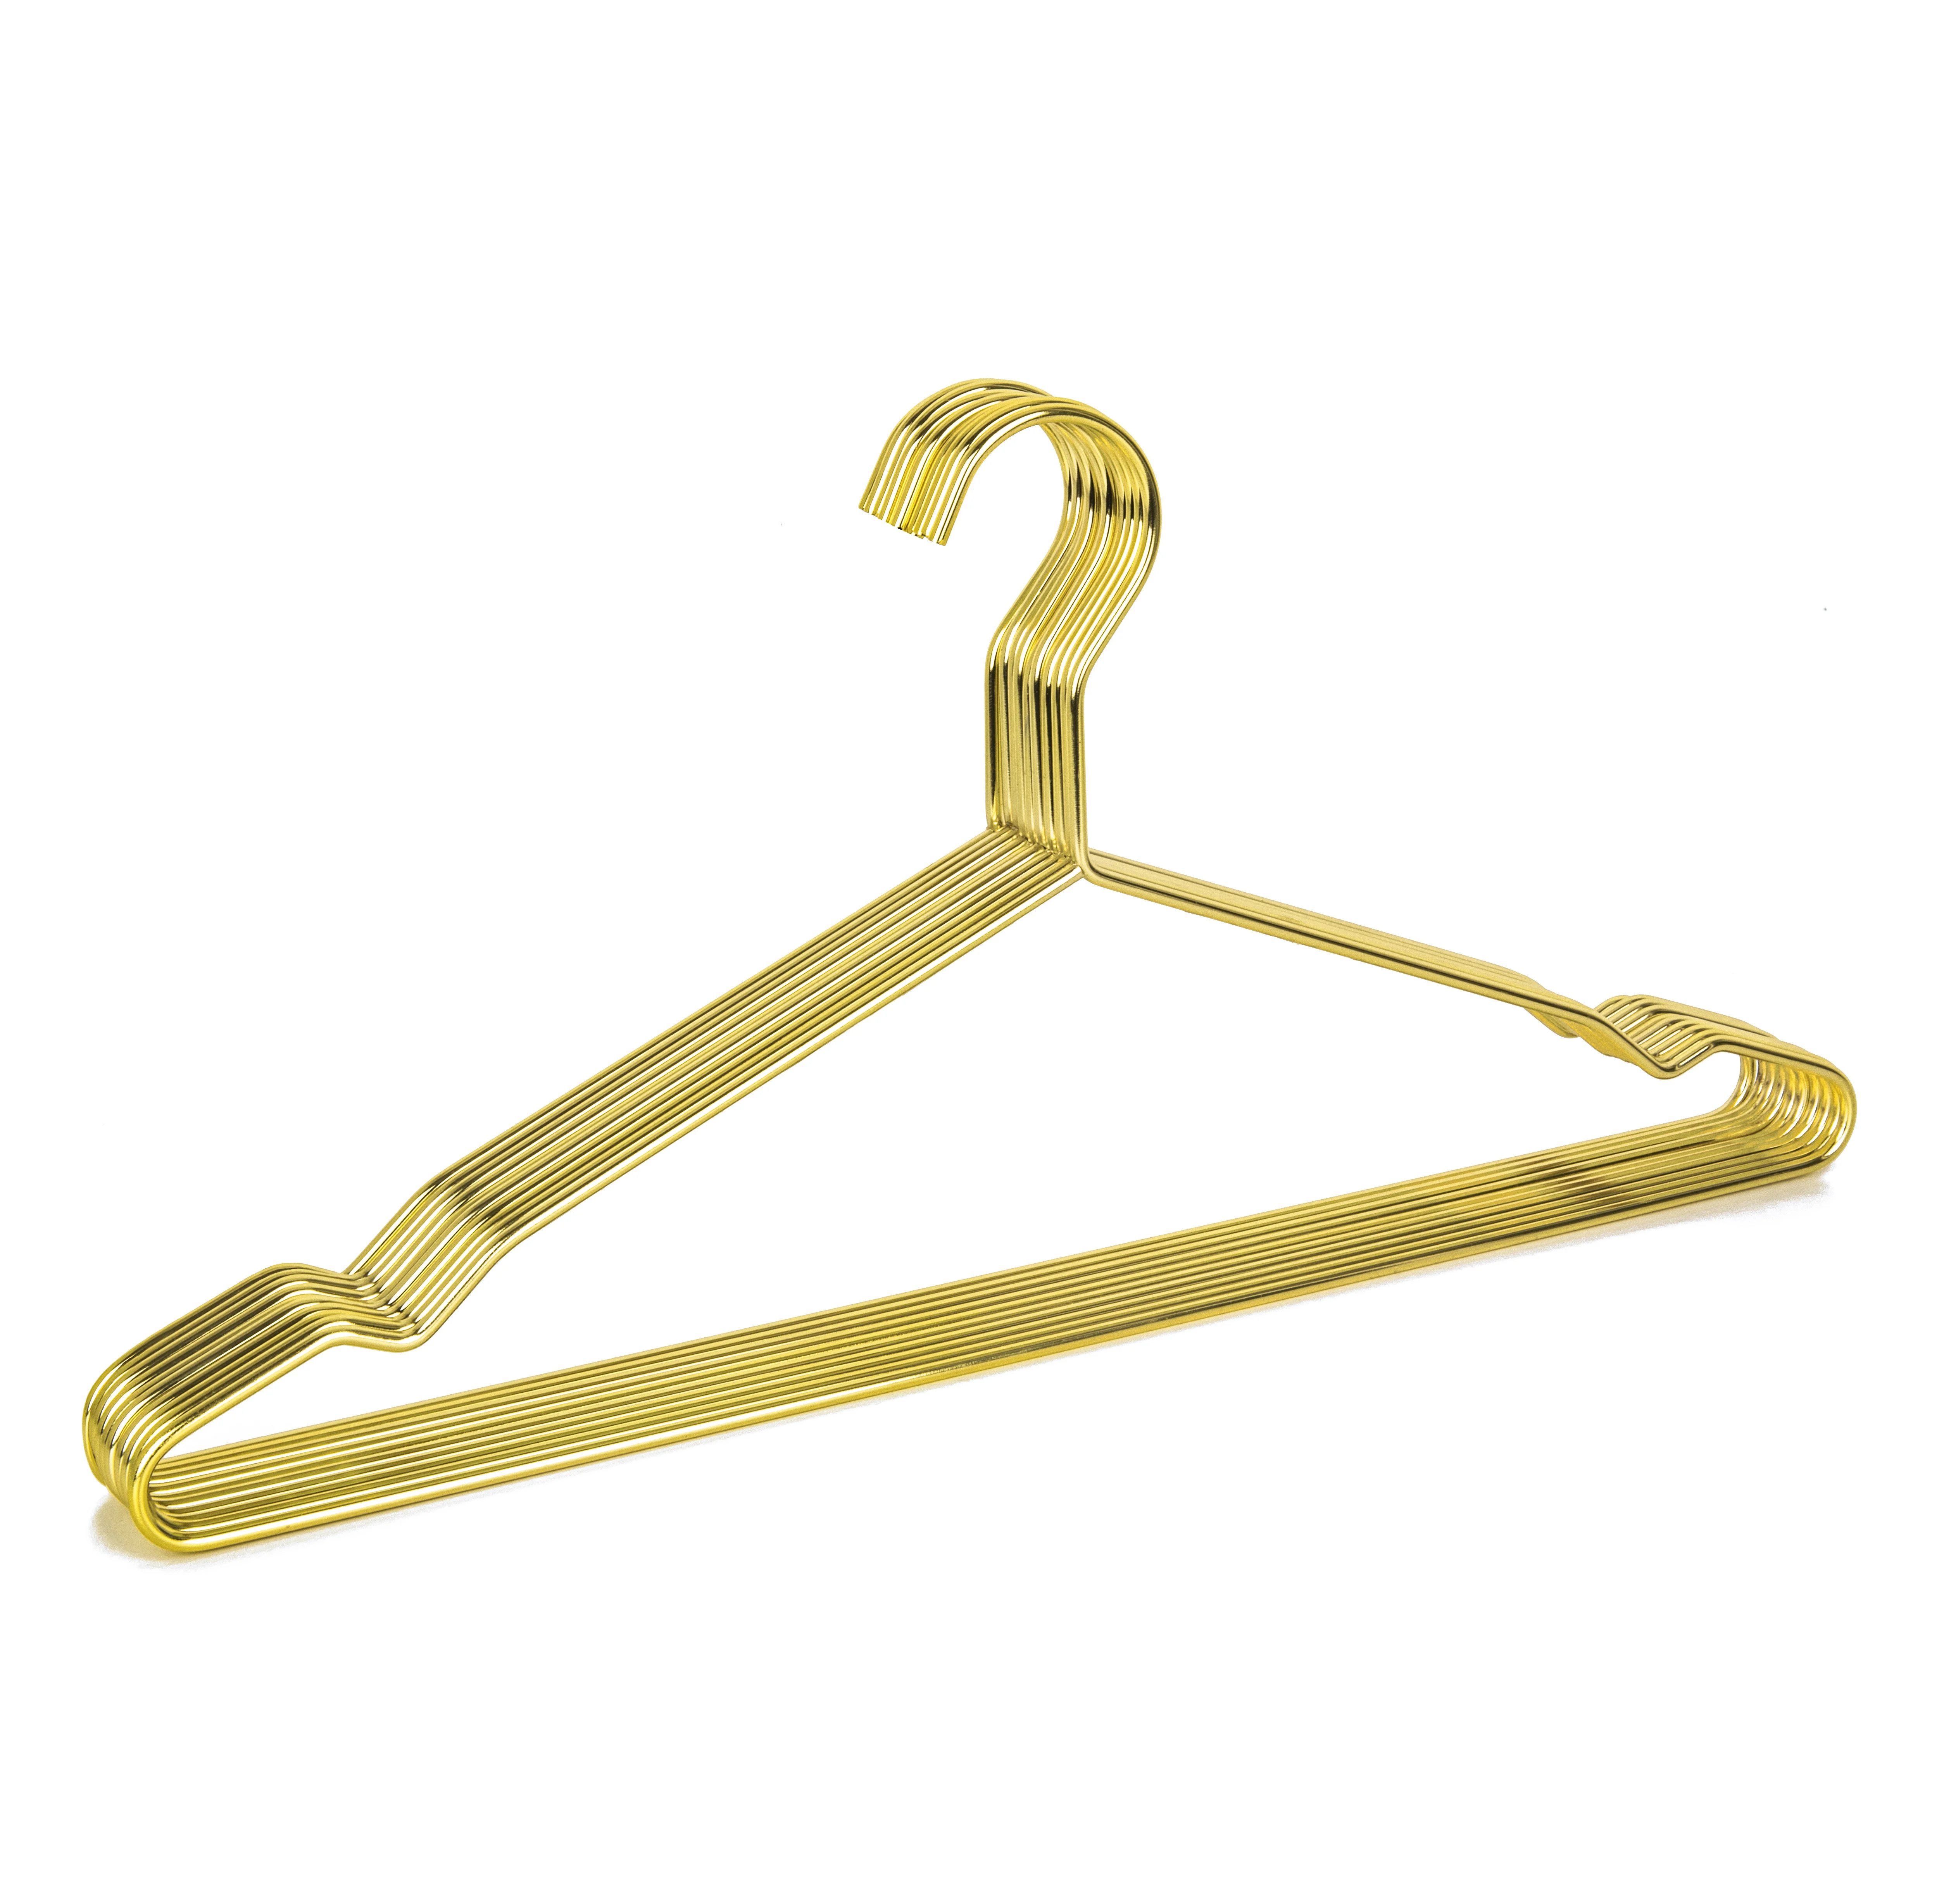 Details about   Aldut Heavy Duty Gold Wire Metal Coat Hanger Clothes Hangers Strong Coat Hanger 